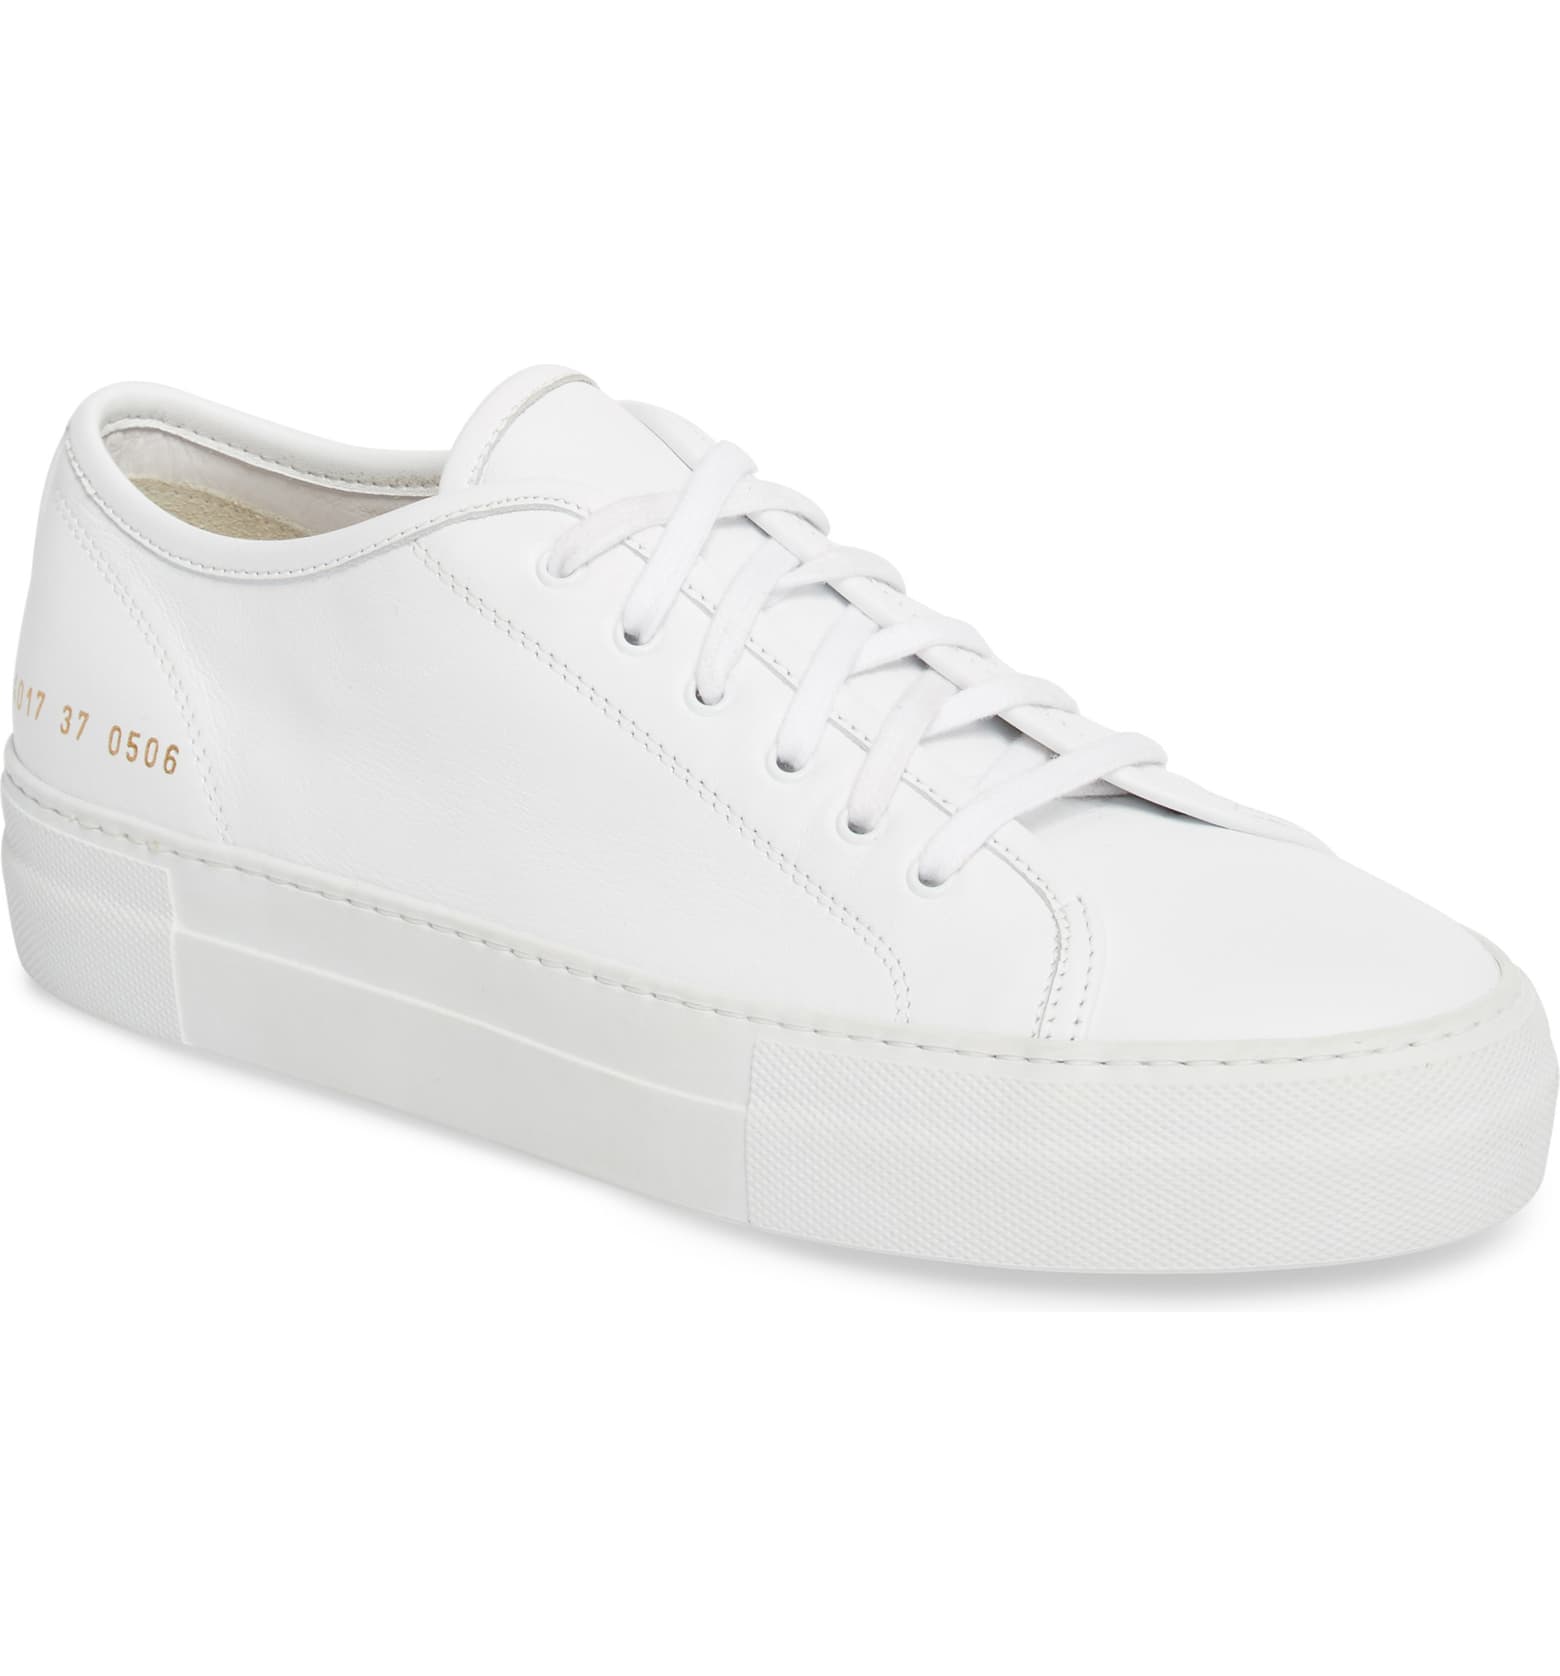 plain white shoes